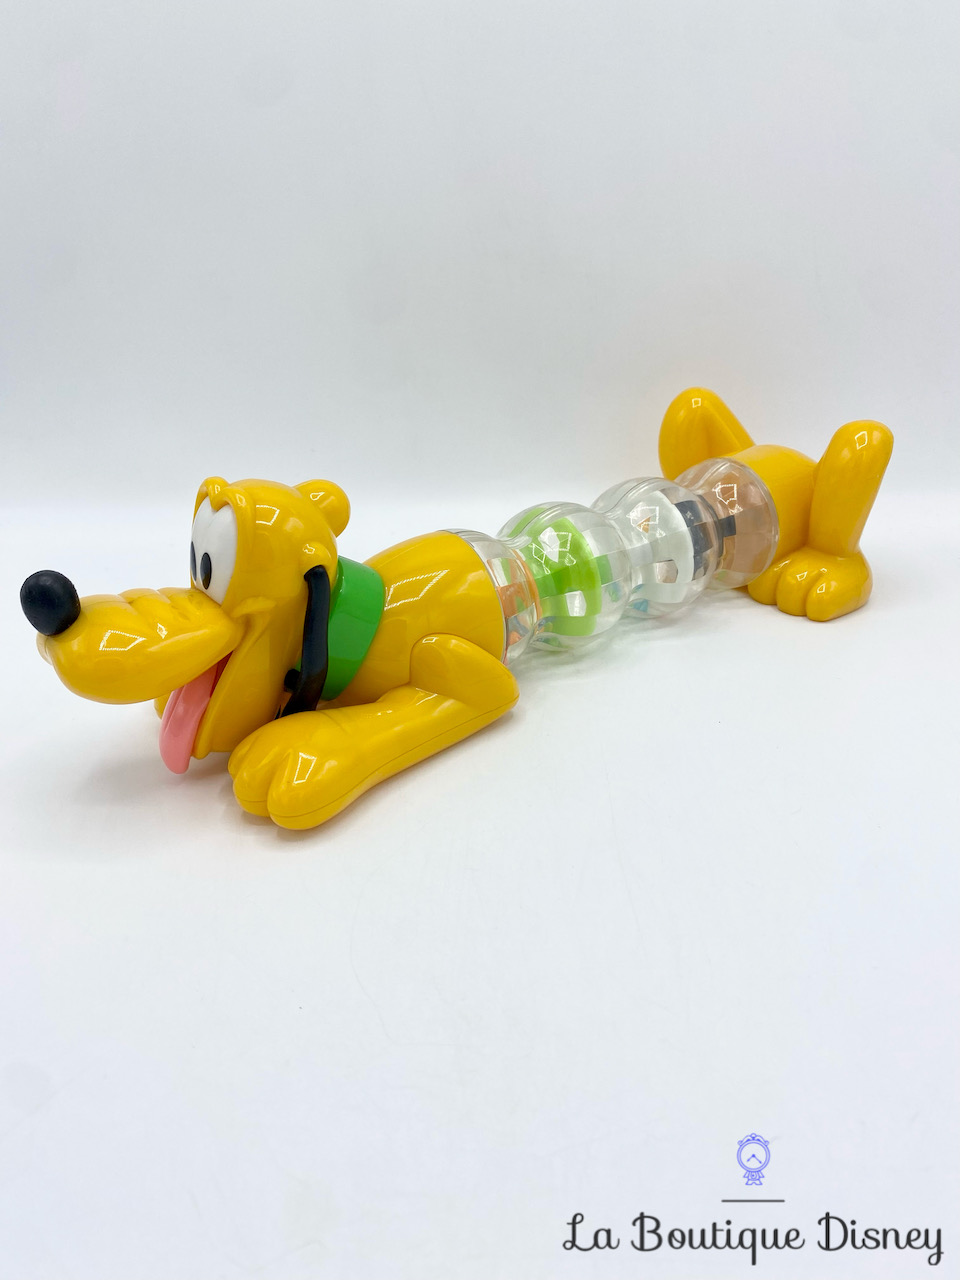 Jouet Hochet Pluto Billes Disneyland Paris Disney tourbillon bébé